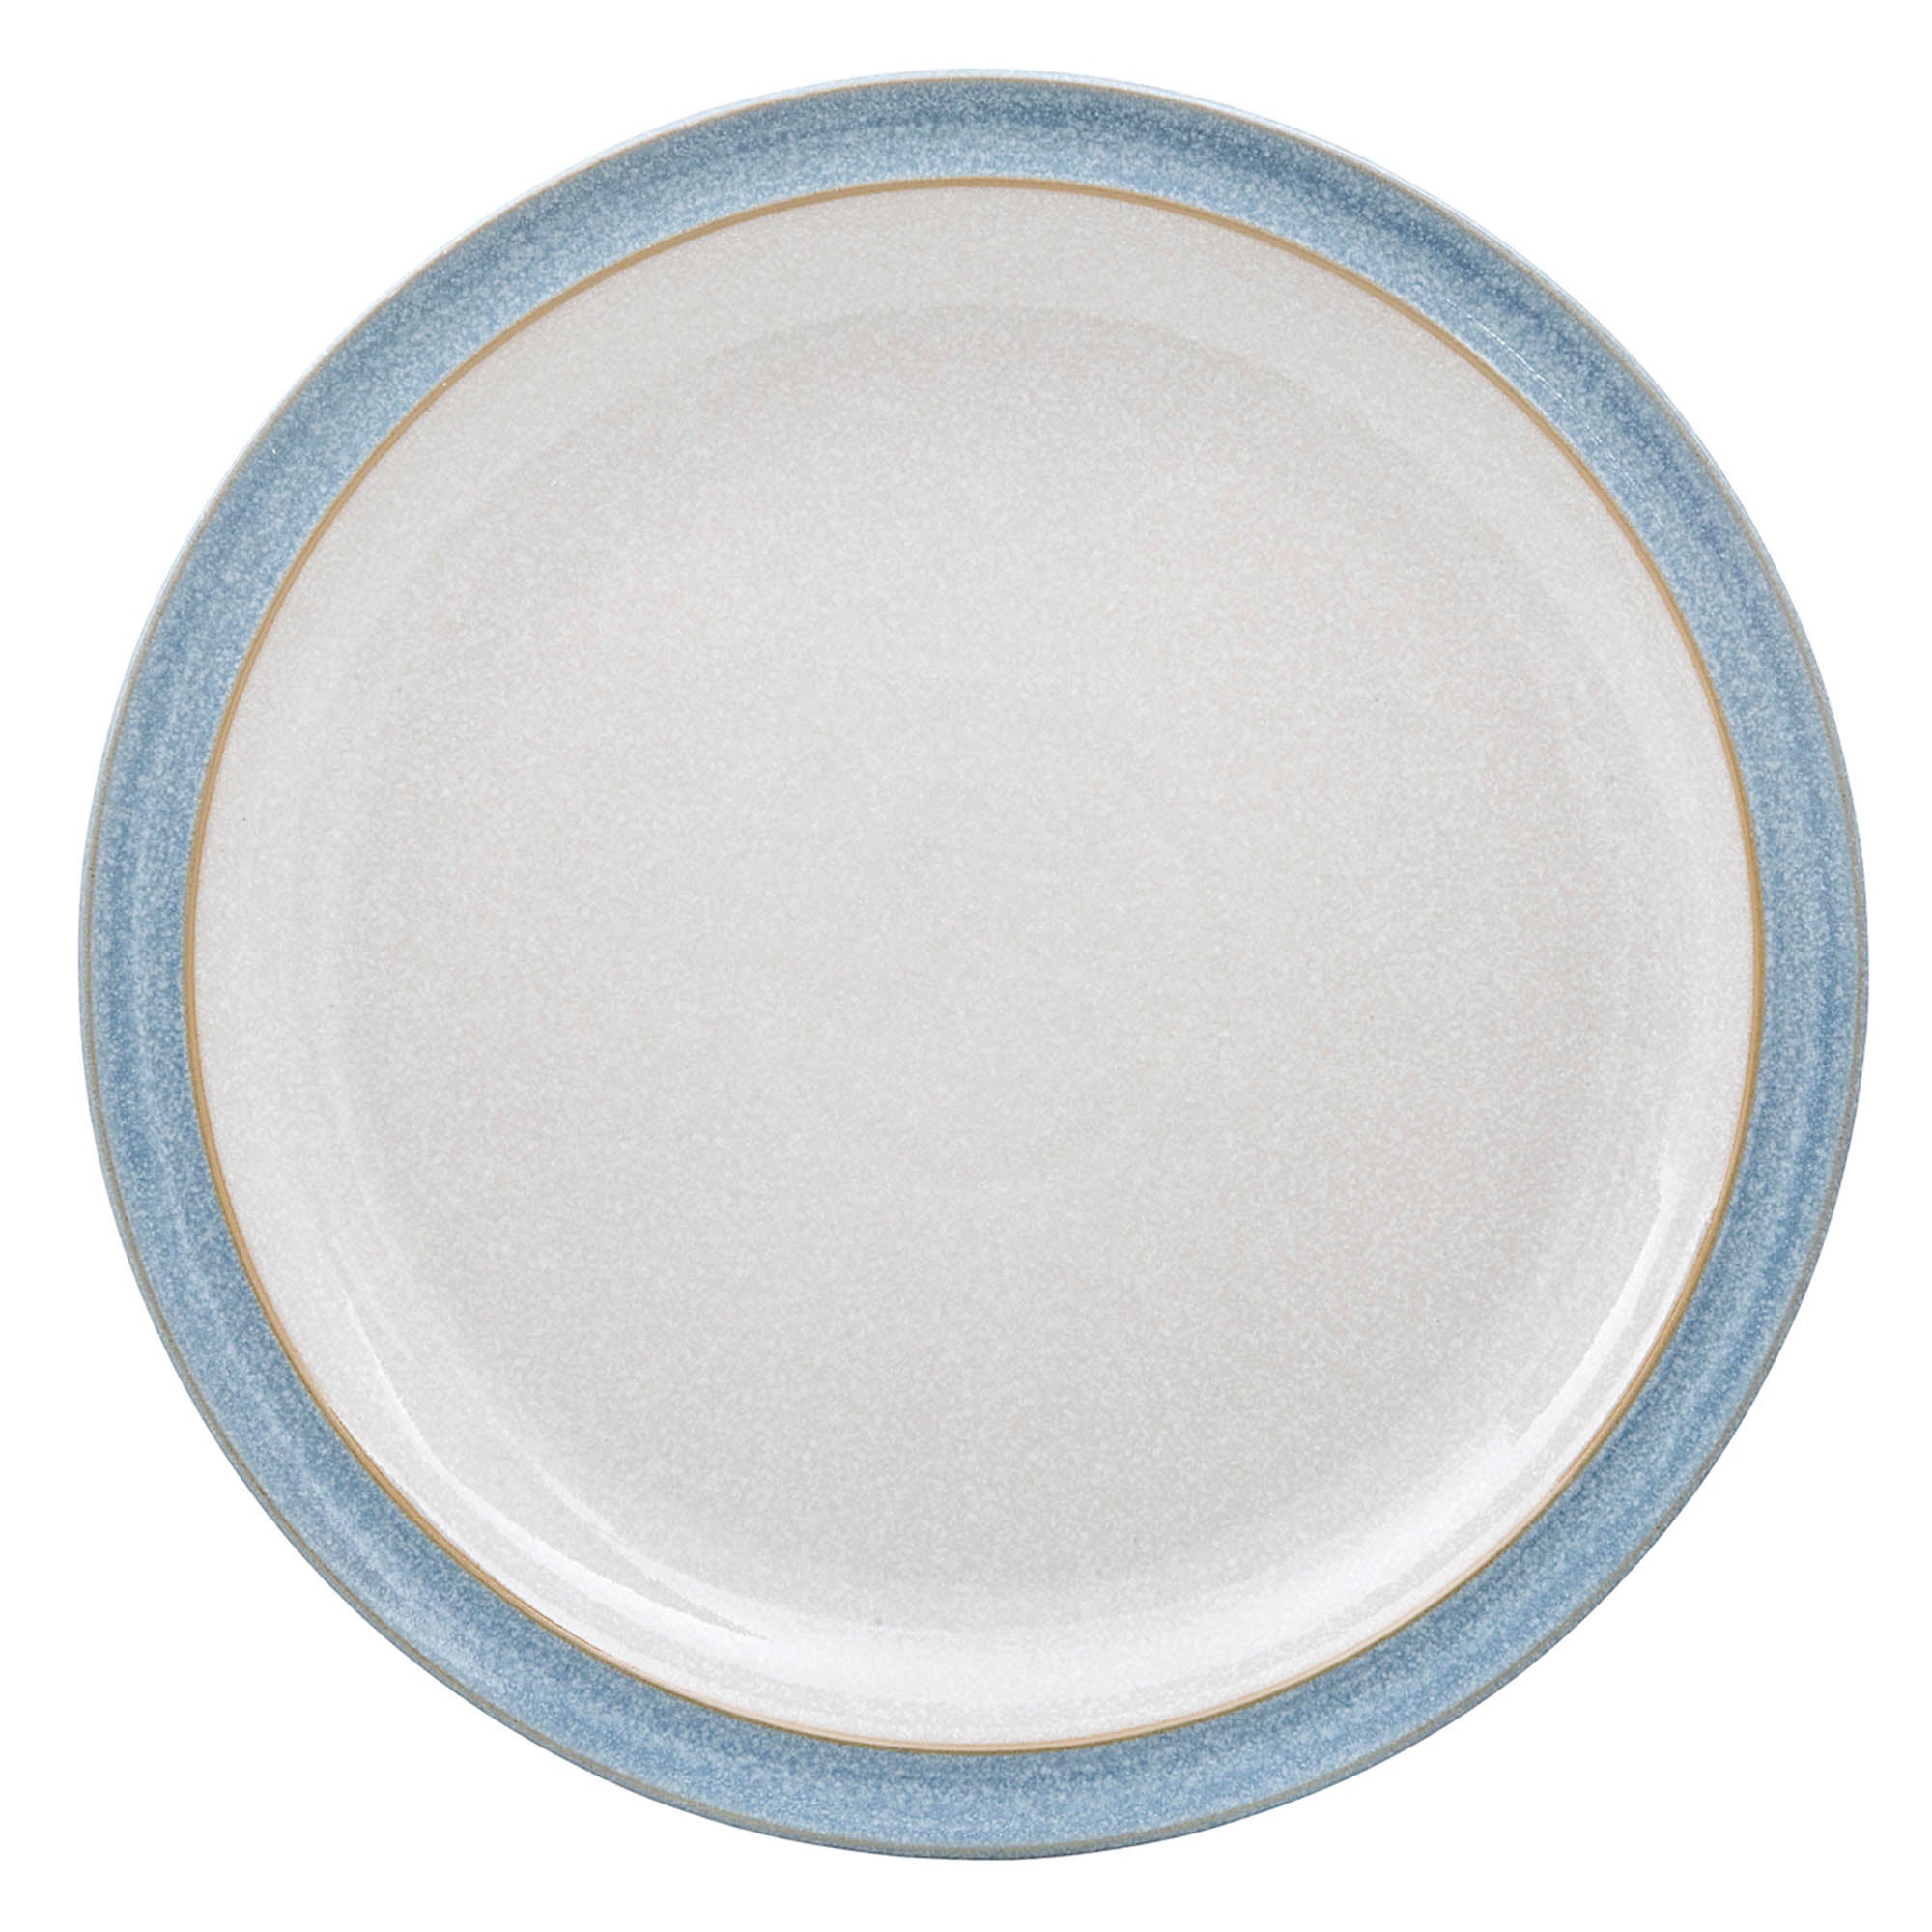 Denby Elements Blue Stoneware Dinner Plate